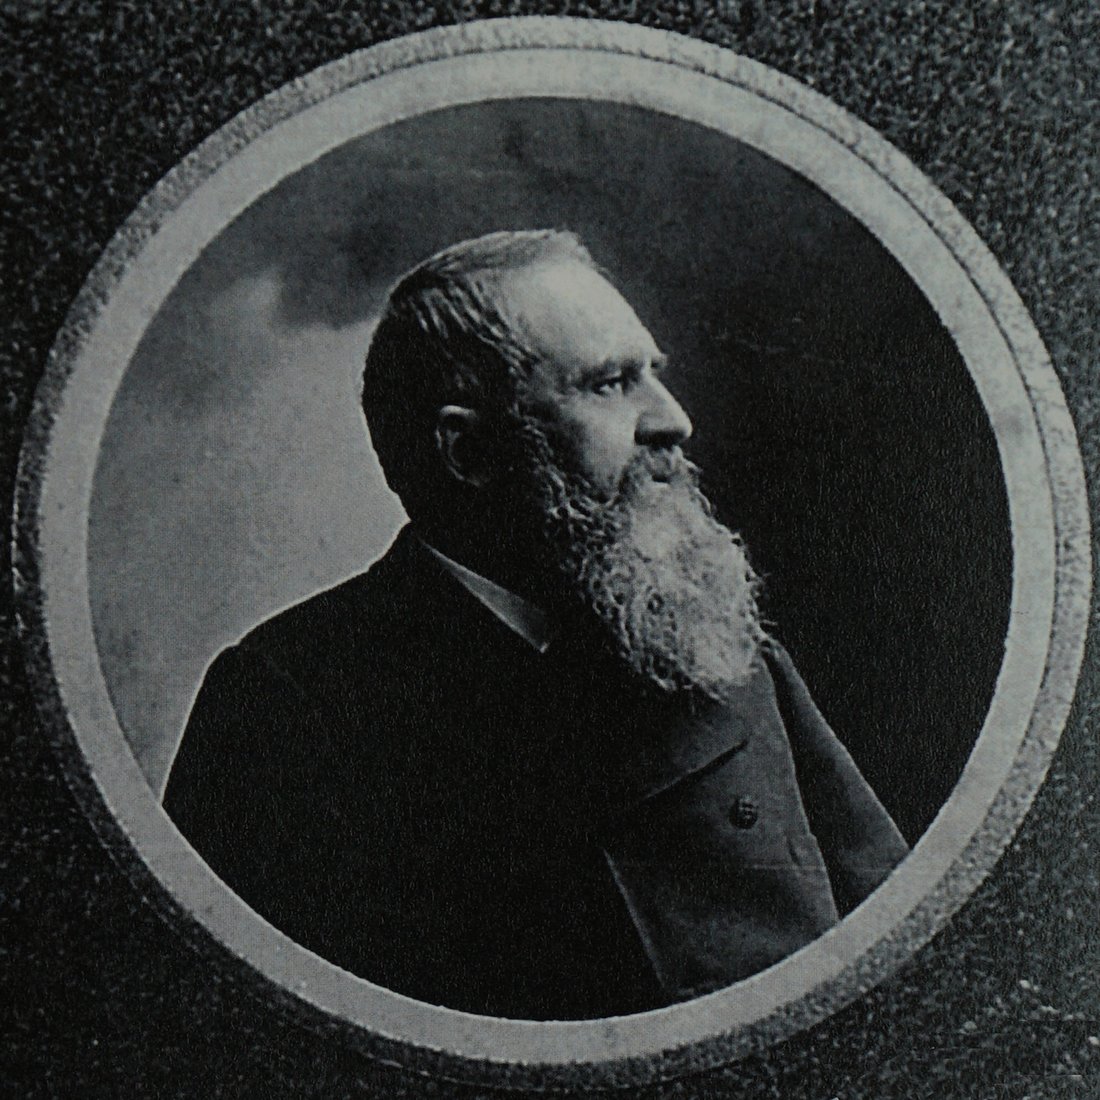 Black and white profile photograph of Gérard